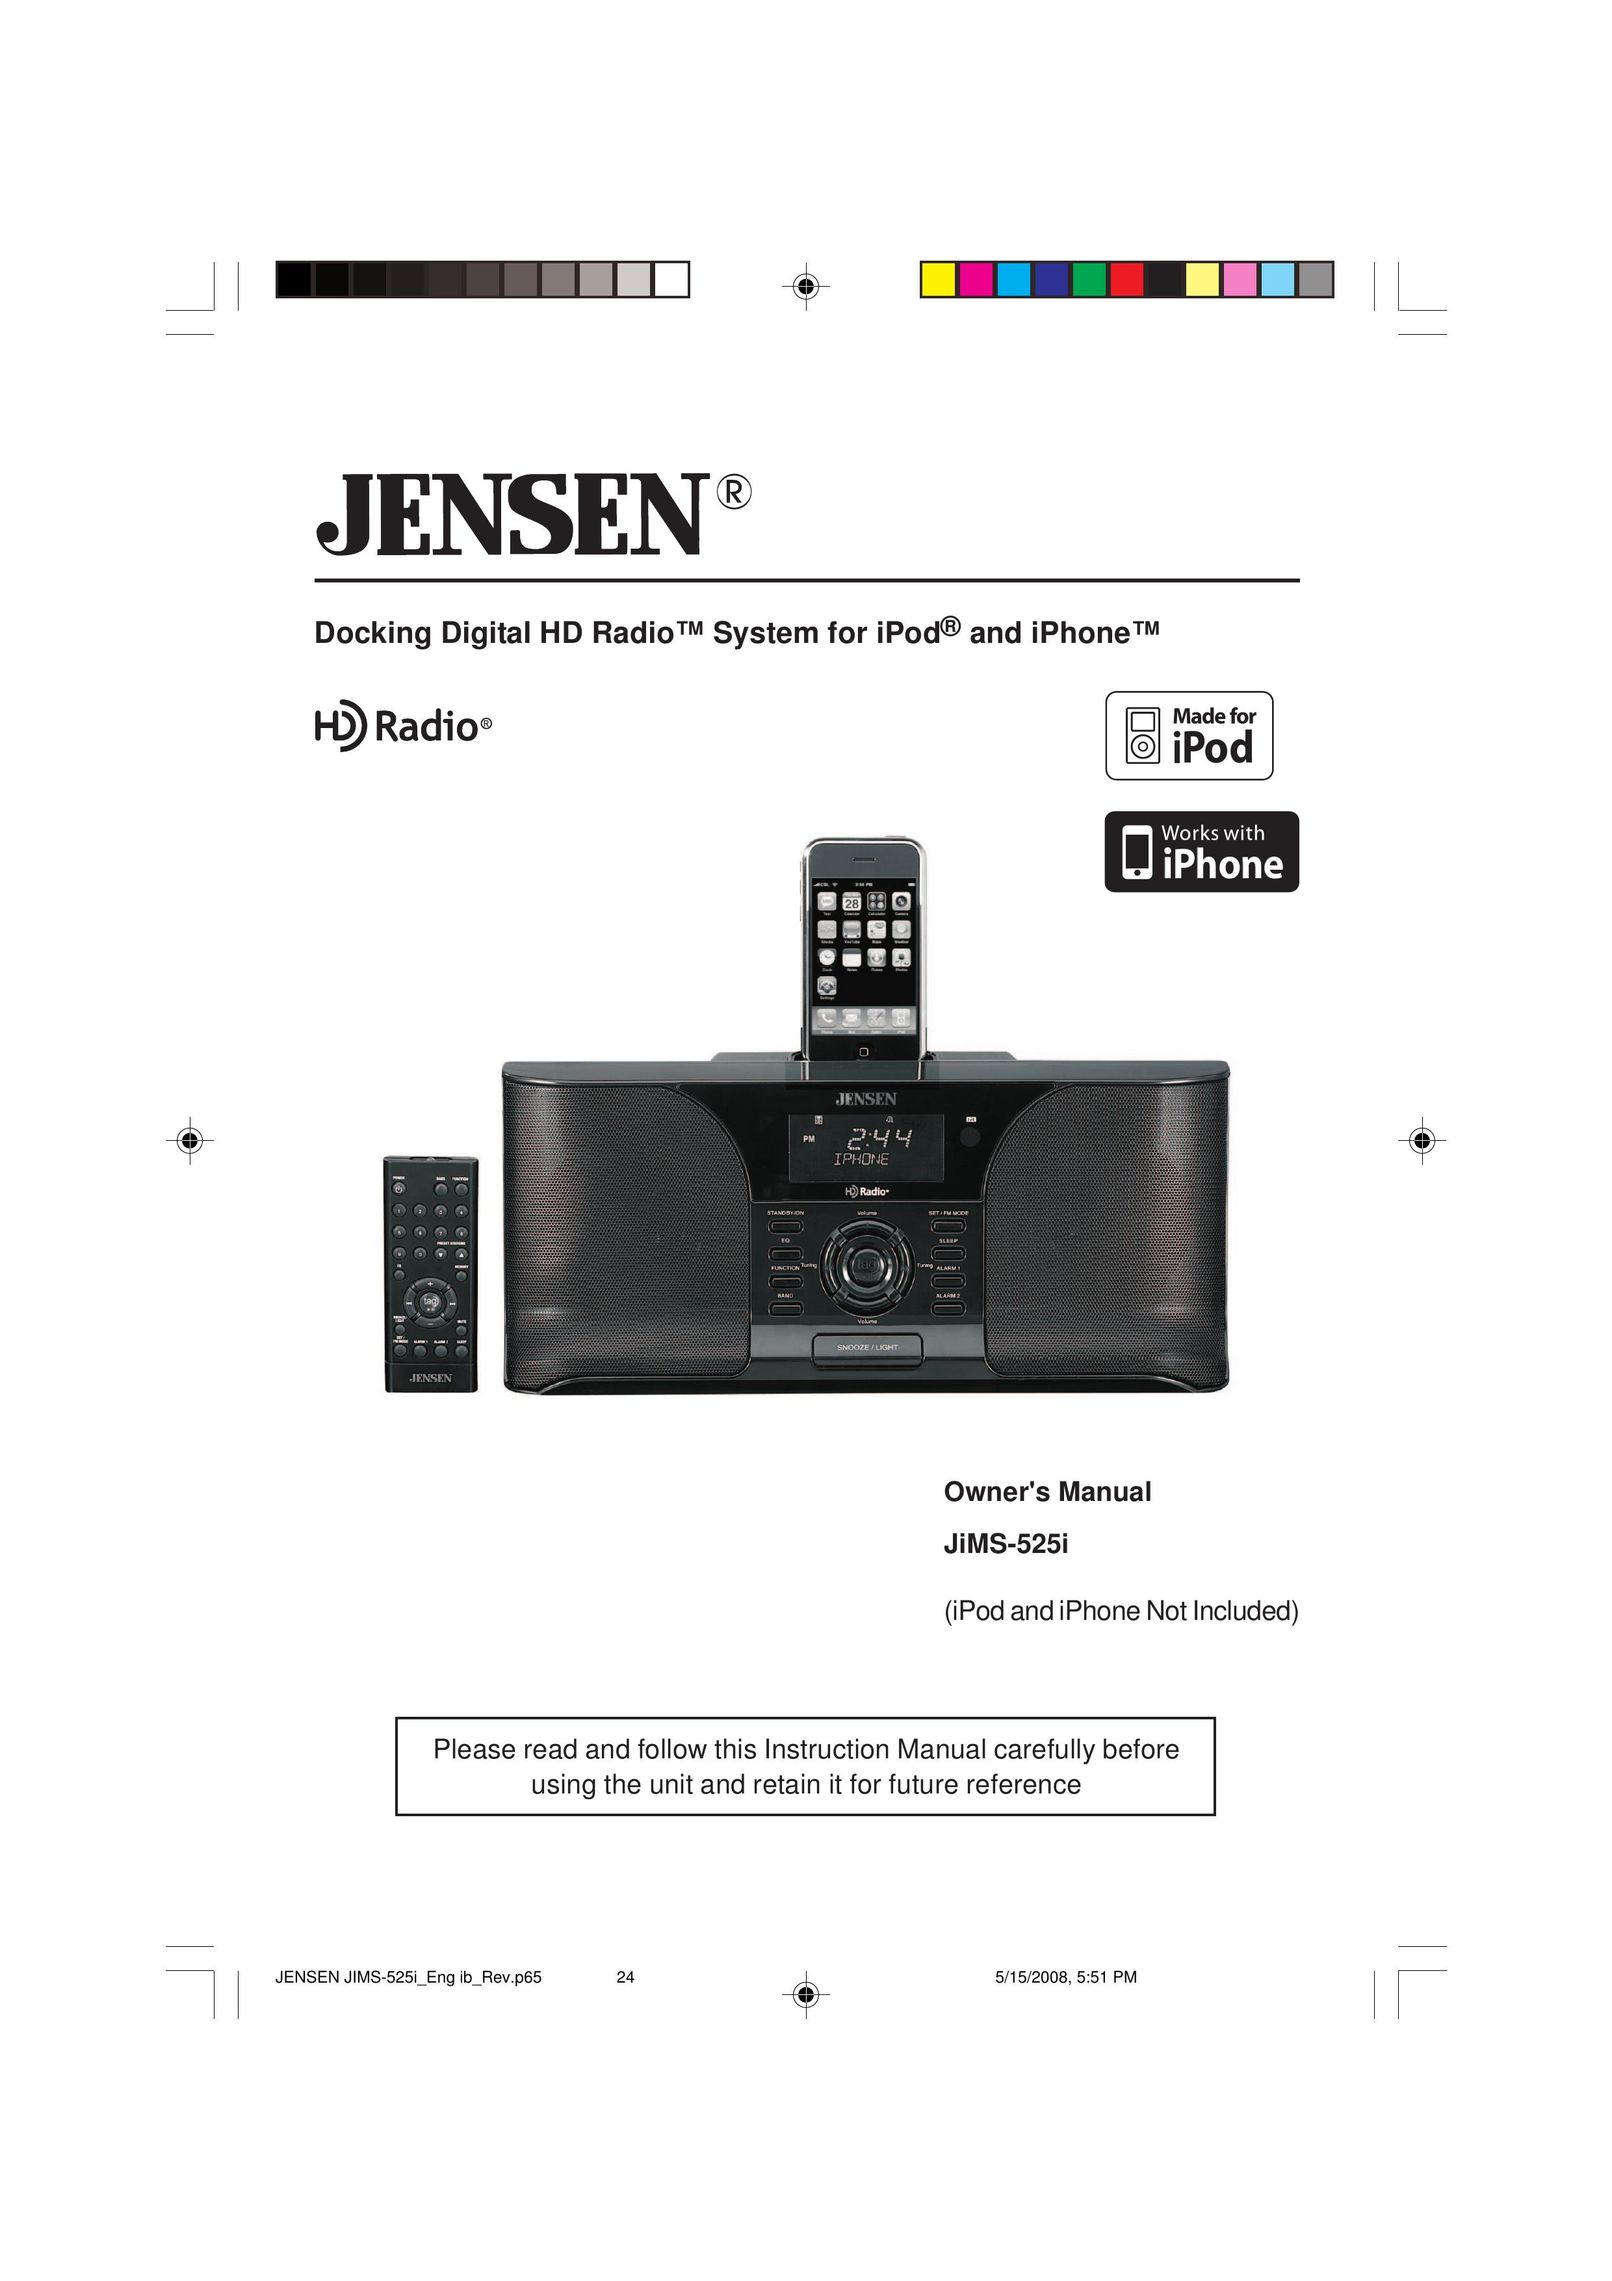 Jensen JiMS-525i MP3 Docking Station User Manual